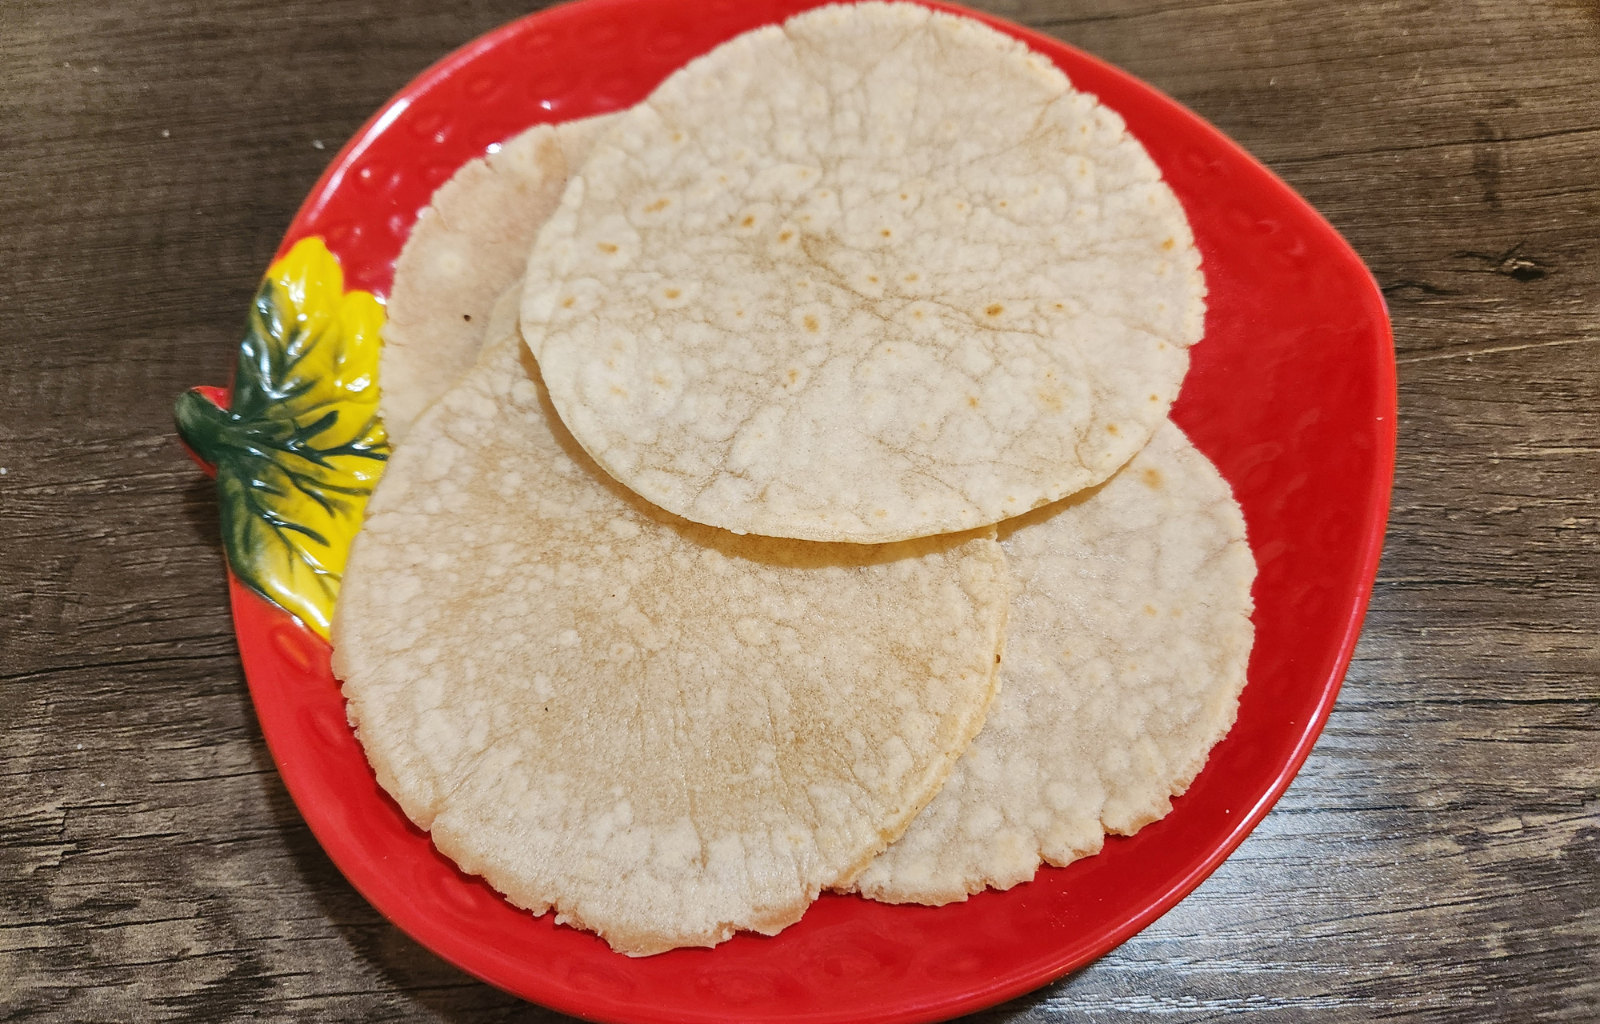 cassava tortillas